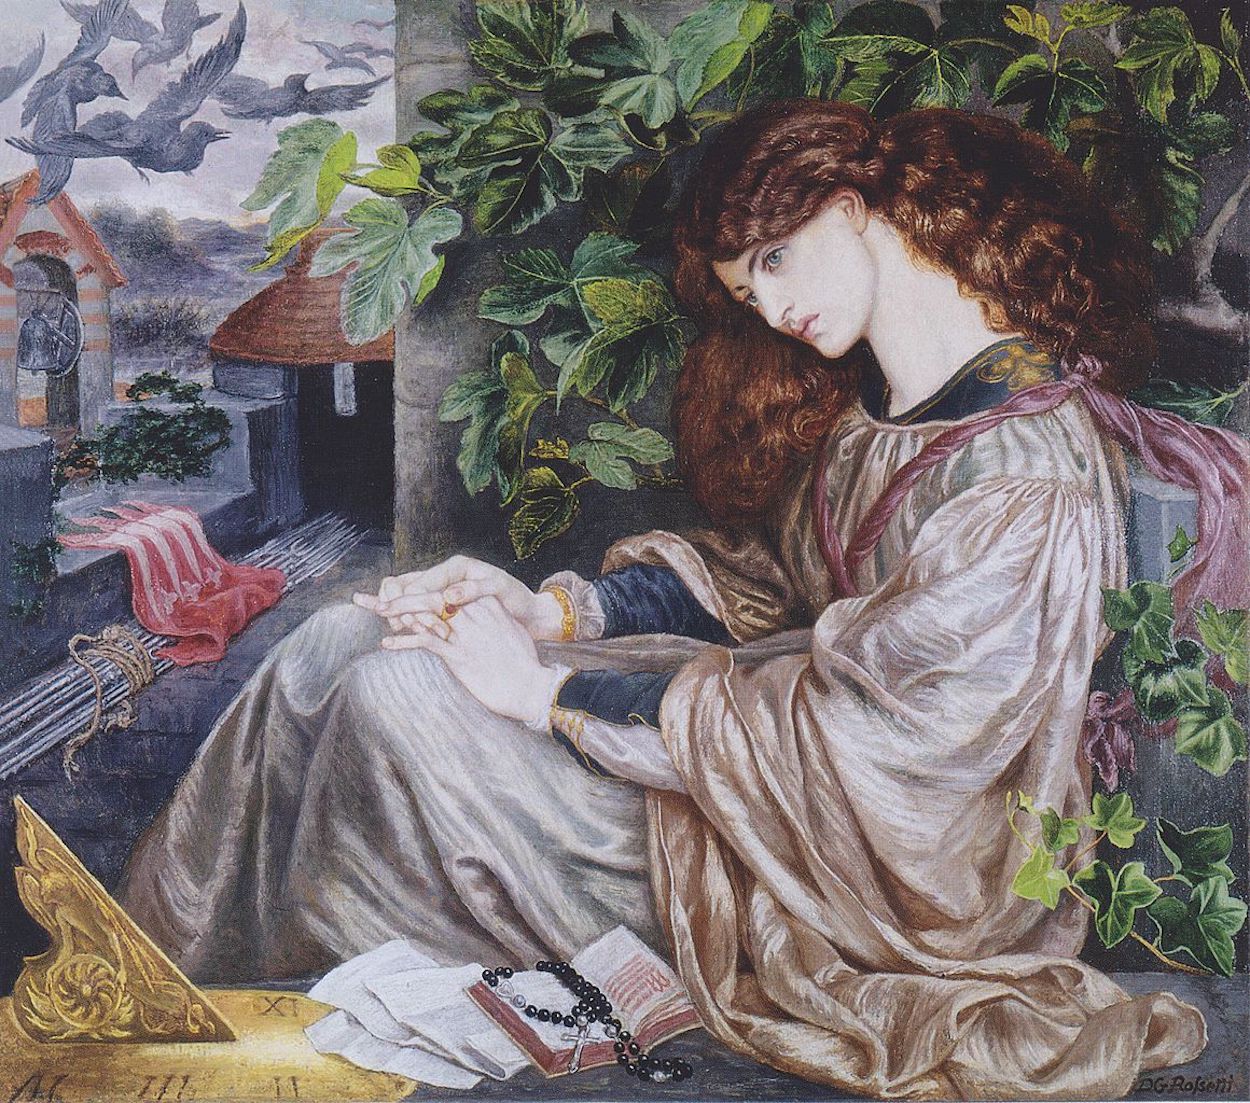 La Pia de' Tolomei by Dante Gabriele Rossetti - 1868–1880 - 104,8 x 120,6 cm 